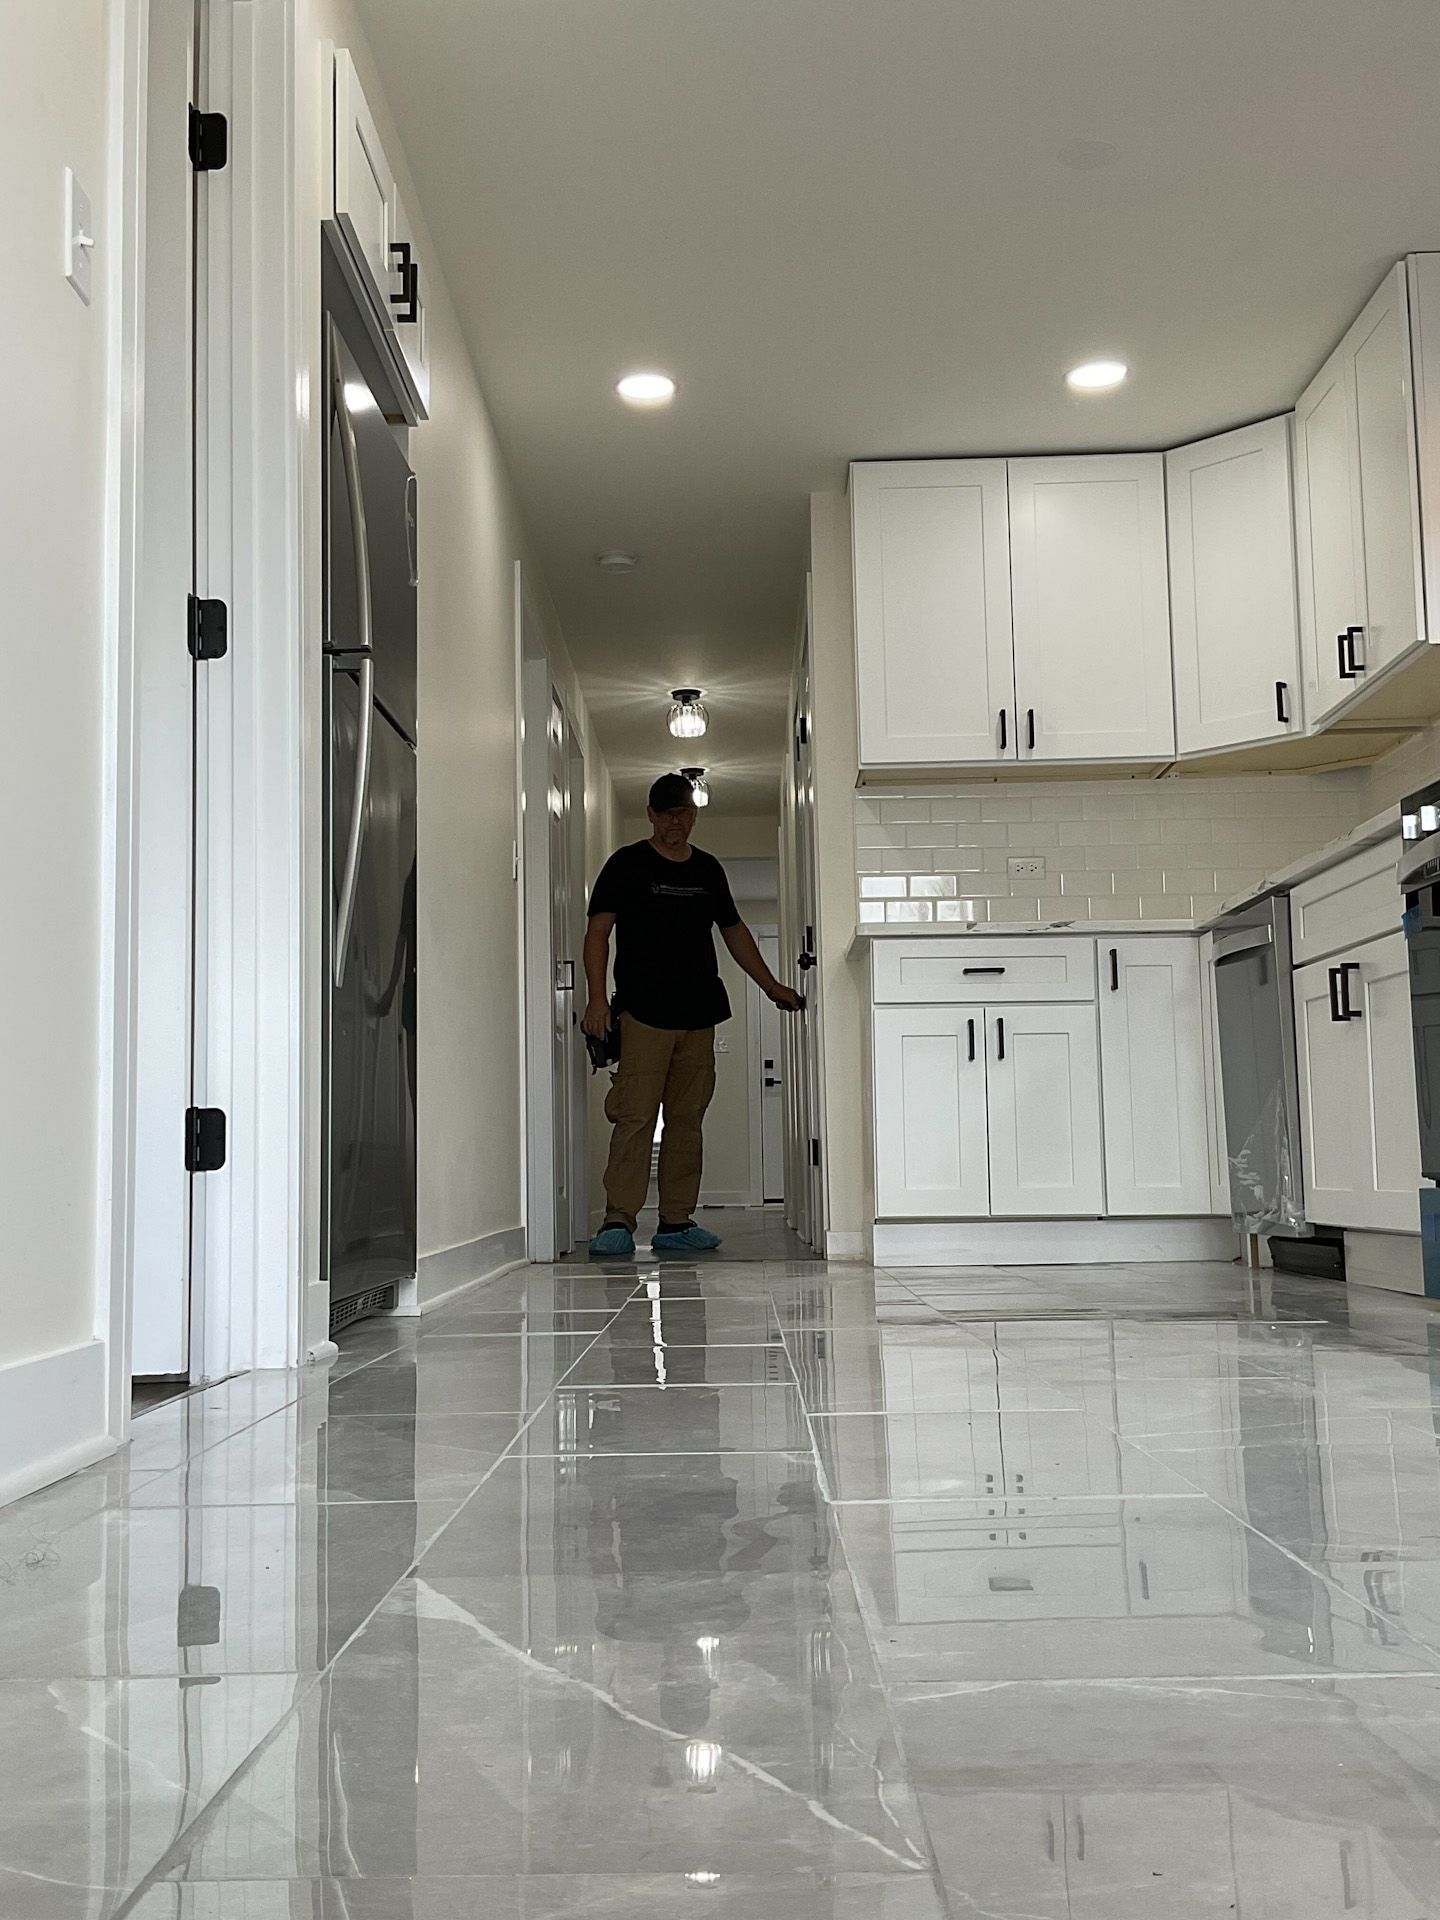 A man is walking down a hallway in a kitchen.